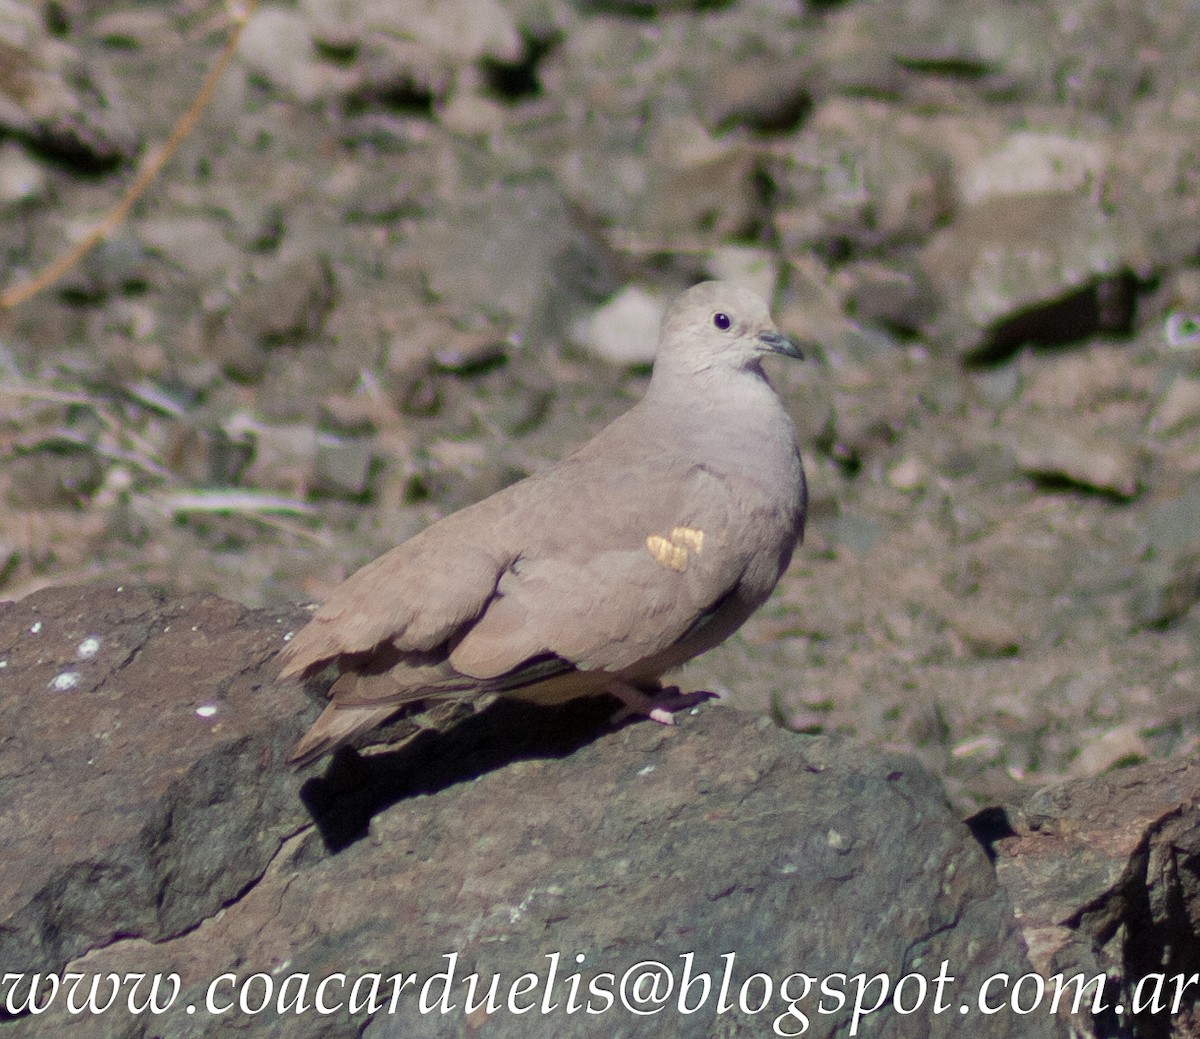 Golden-spotted Ground Dove - Pablo Moreno